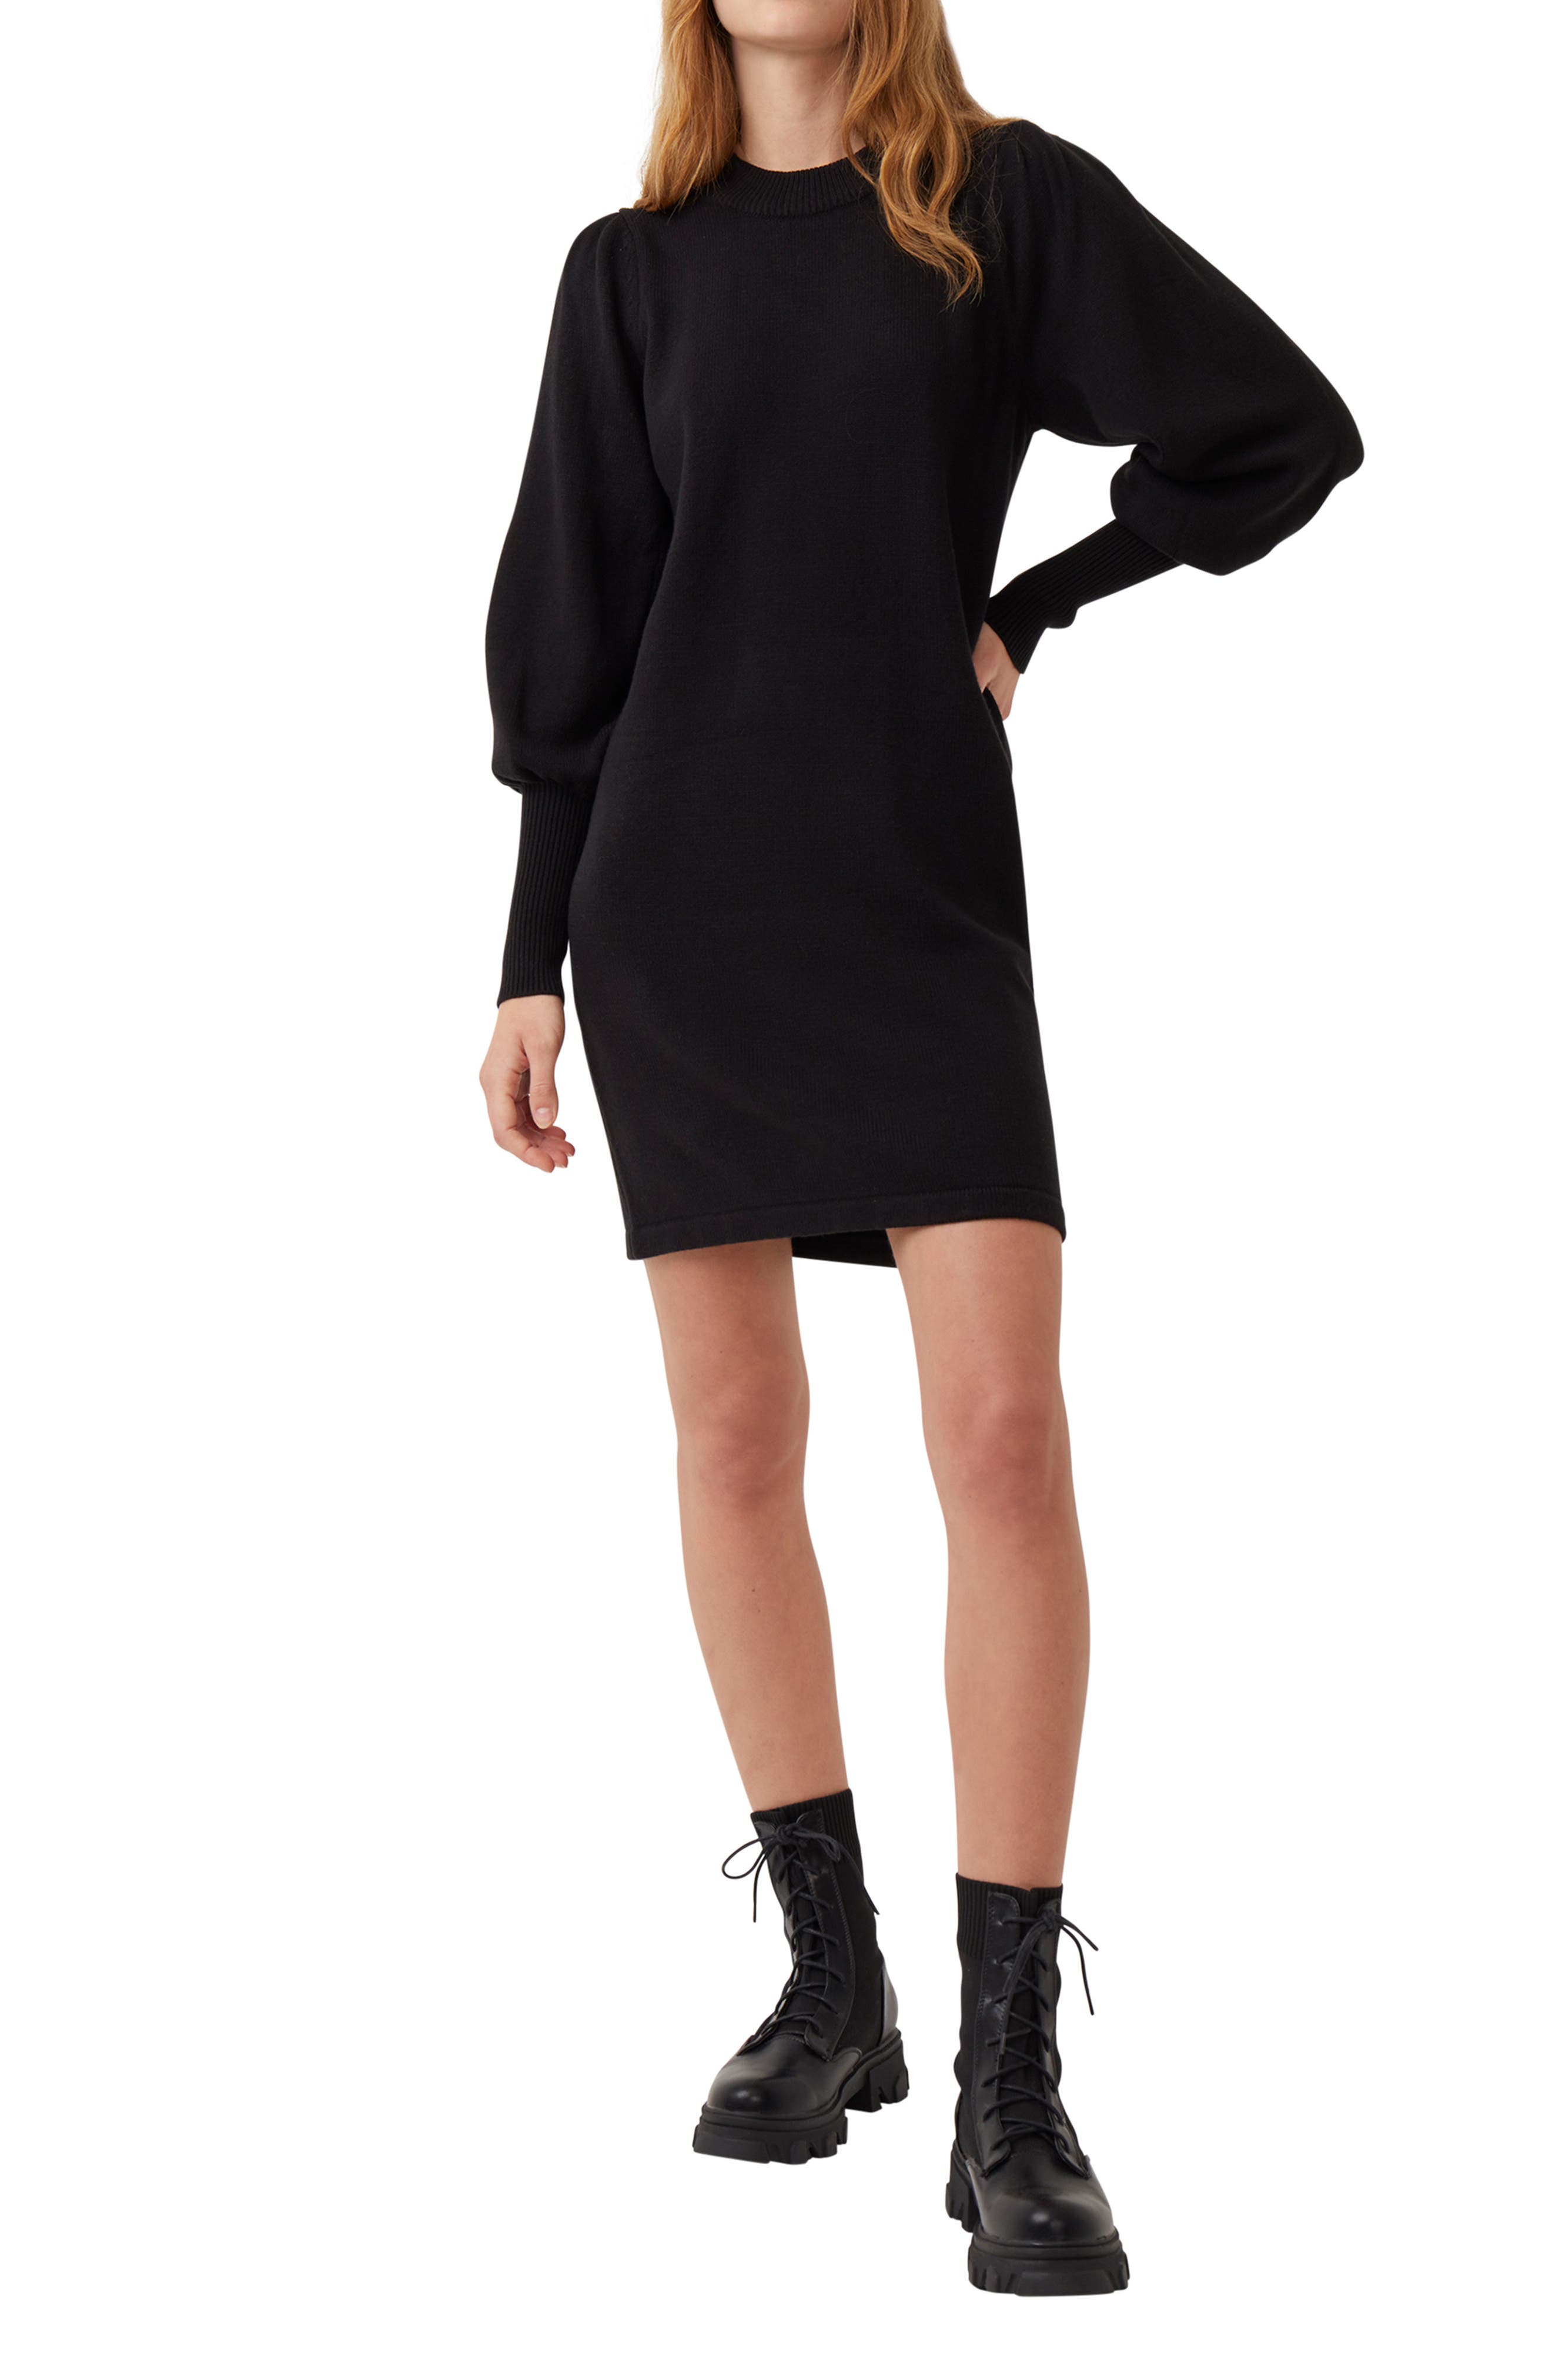 black short sweater dress